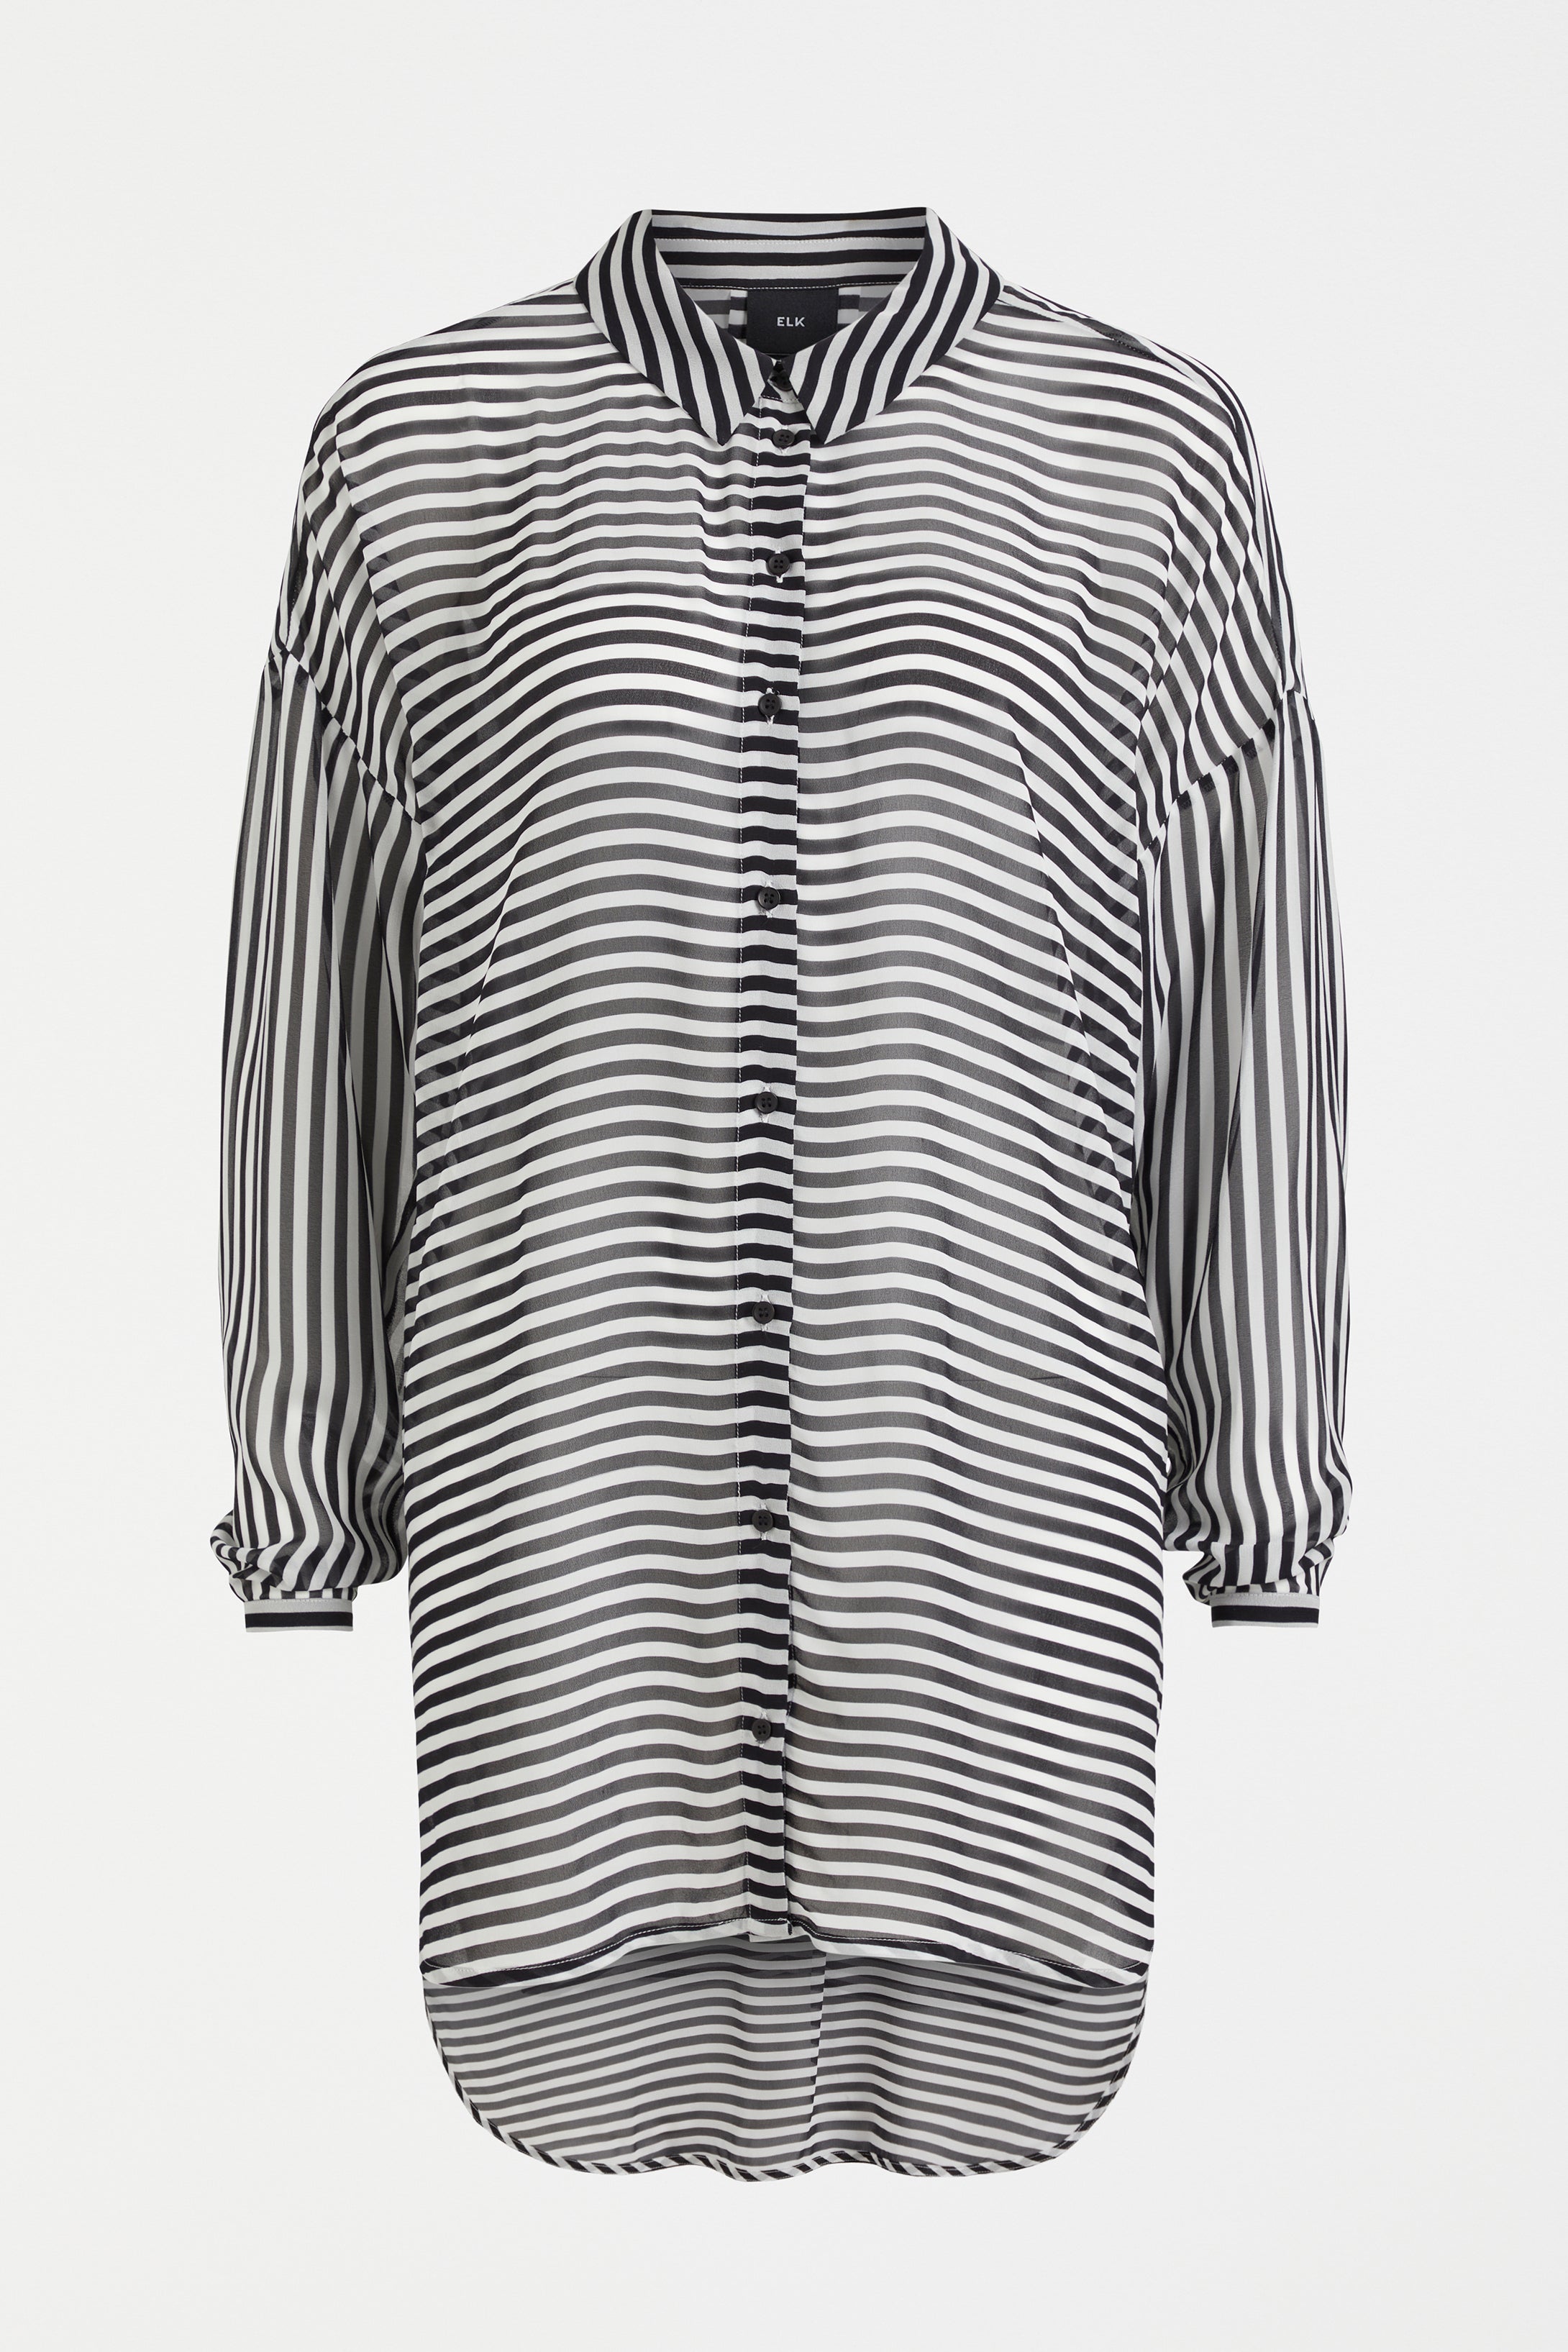 Eir Sheer Shirt - Black/White Stripe